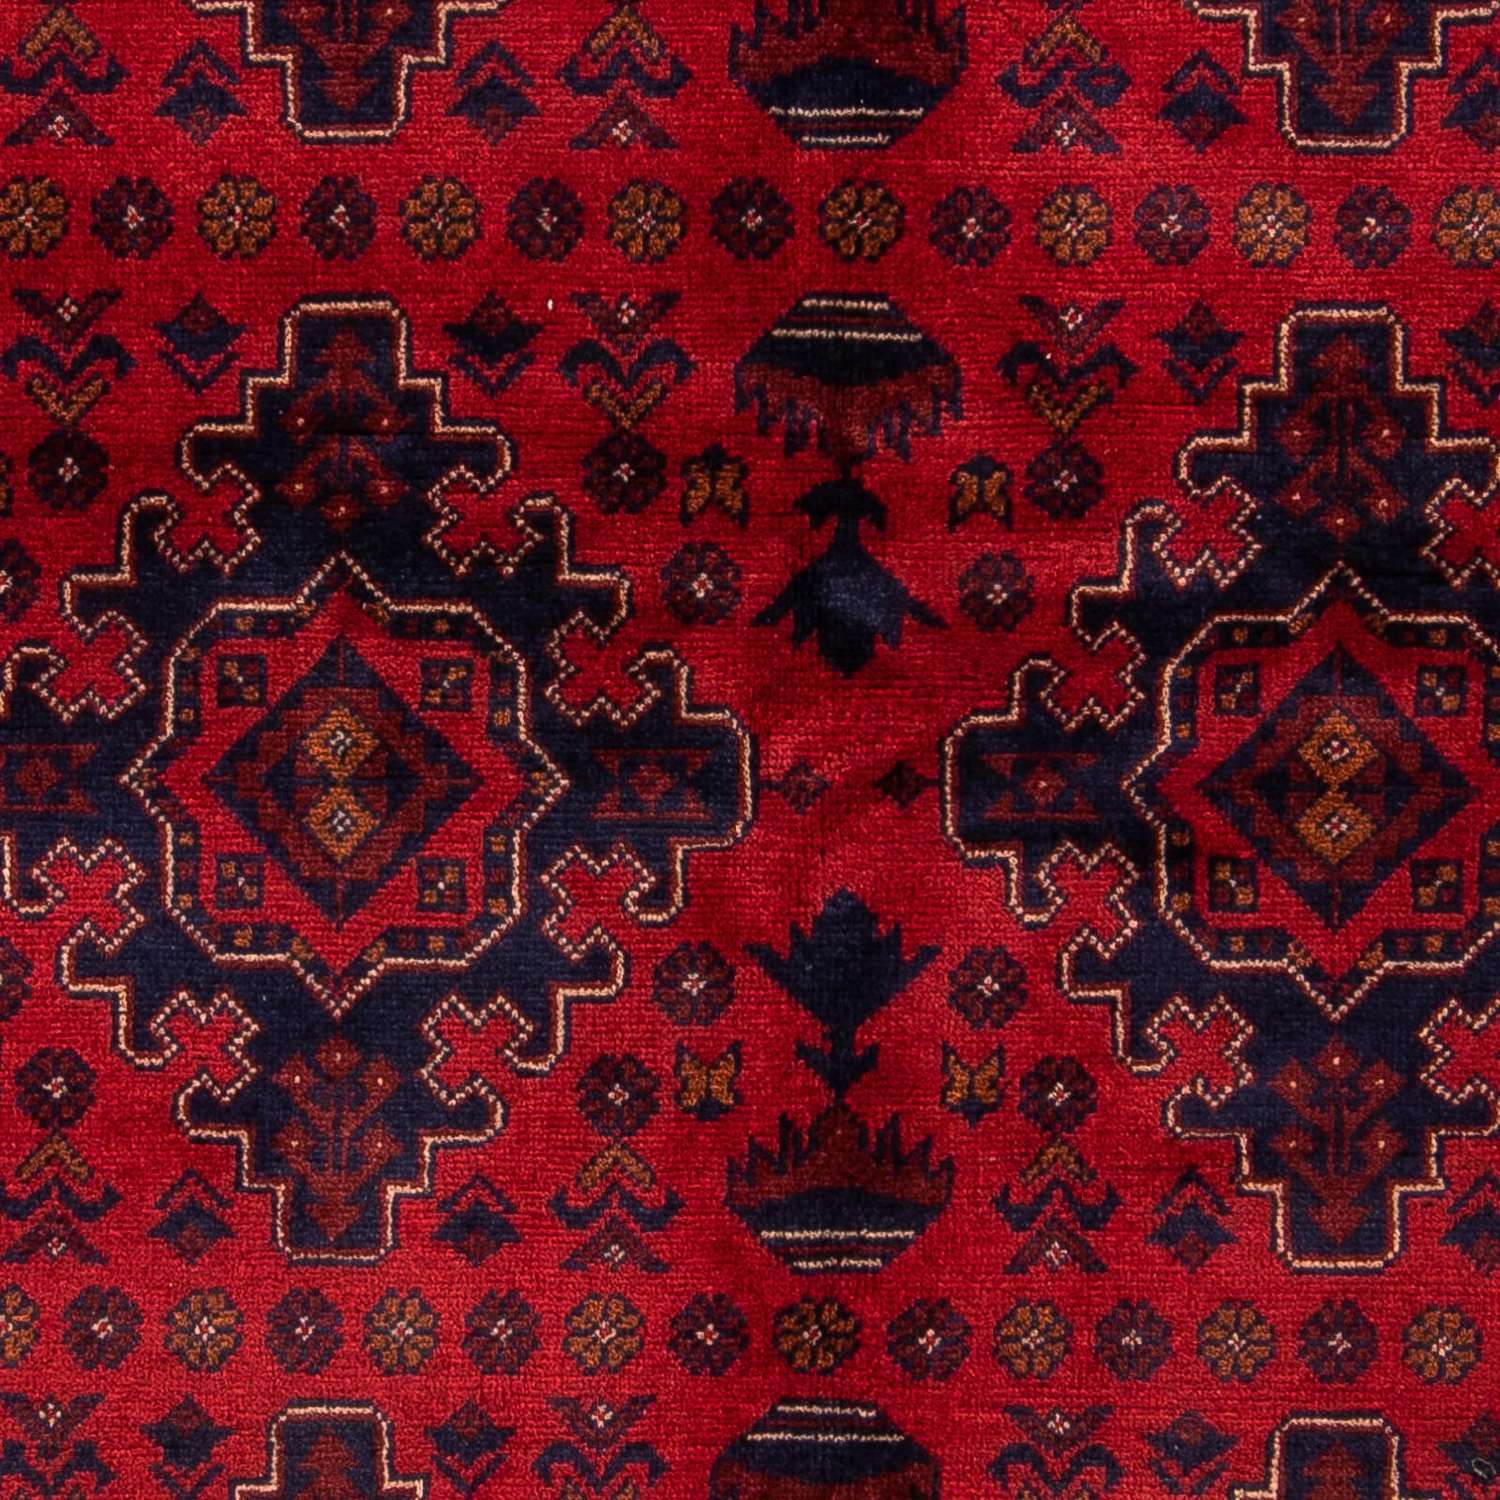 Afghan Rug - Kunduz - 192 x 128 cm - dark red